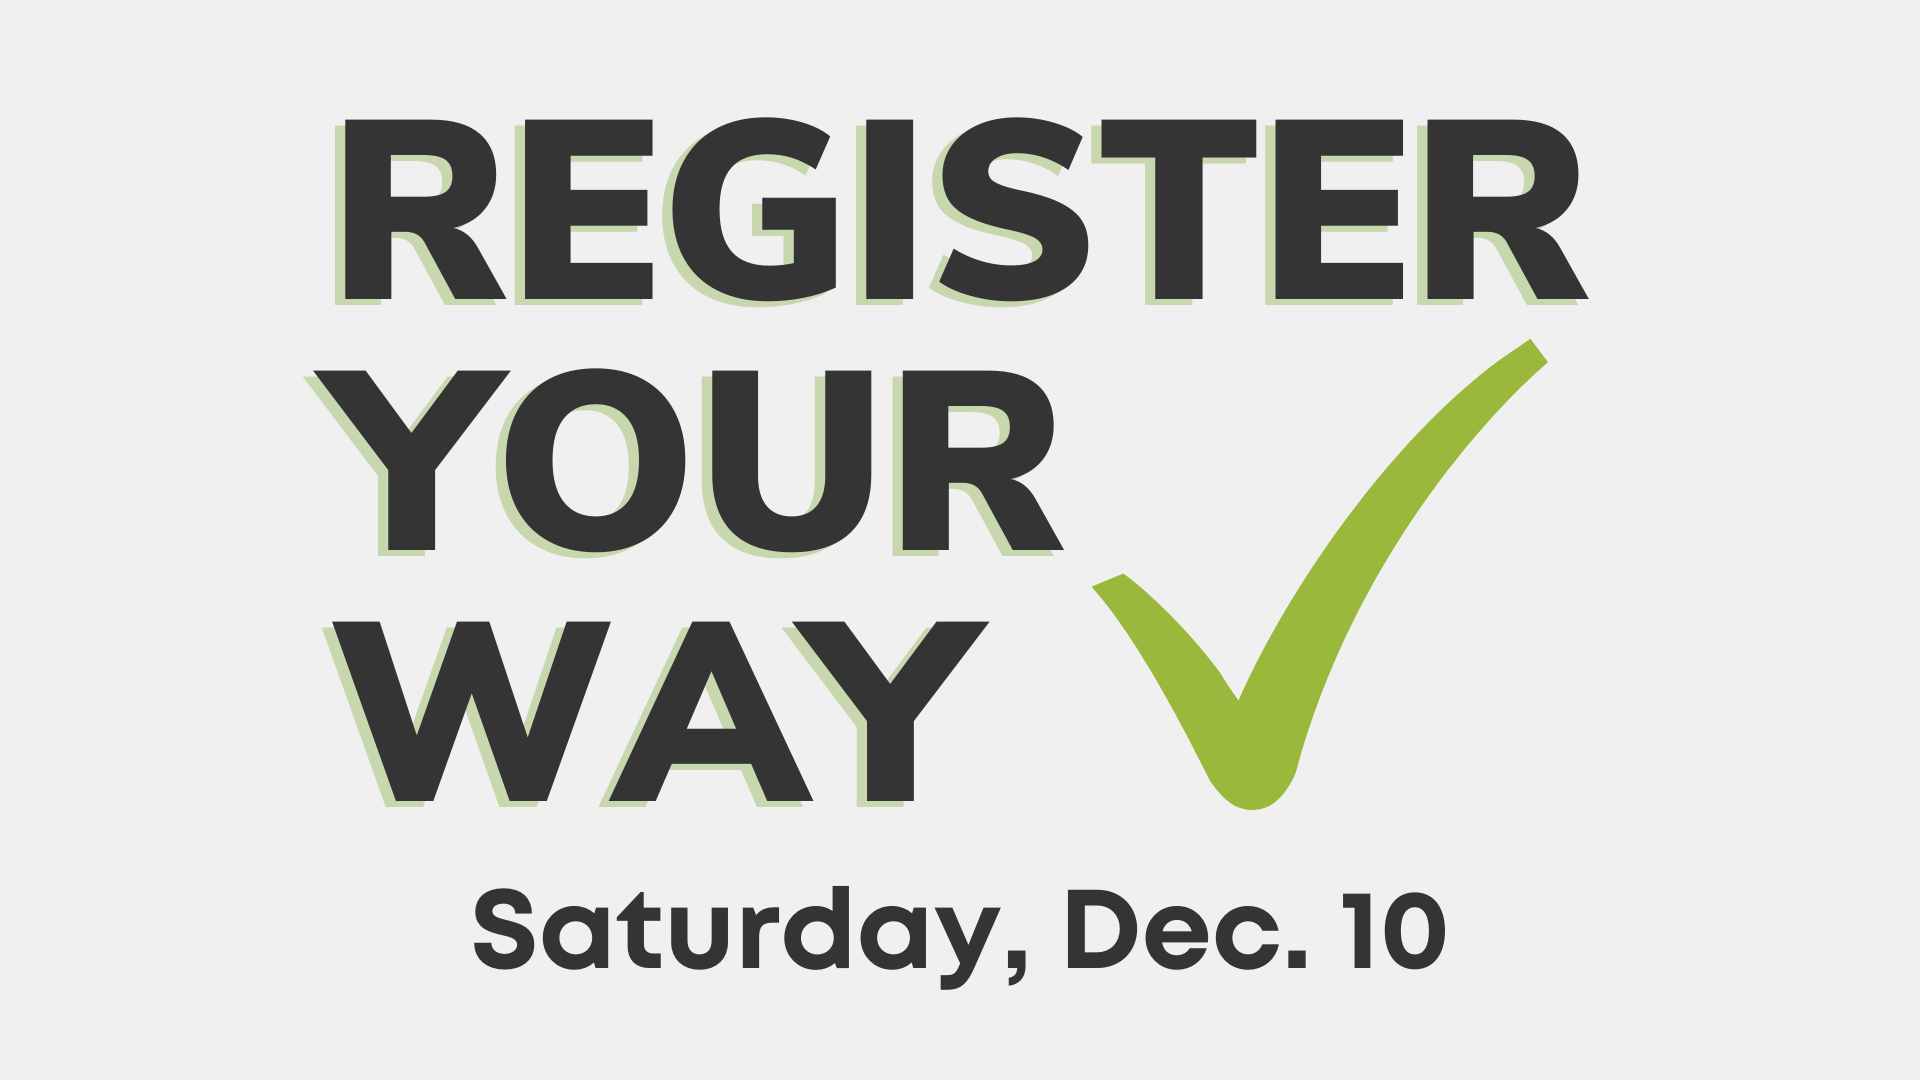 Register Your Way: Saturday, Dec. 10 graphic